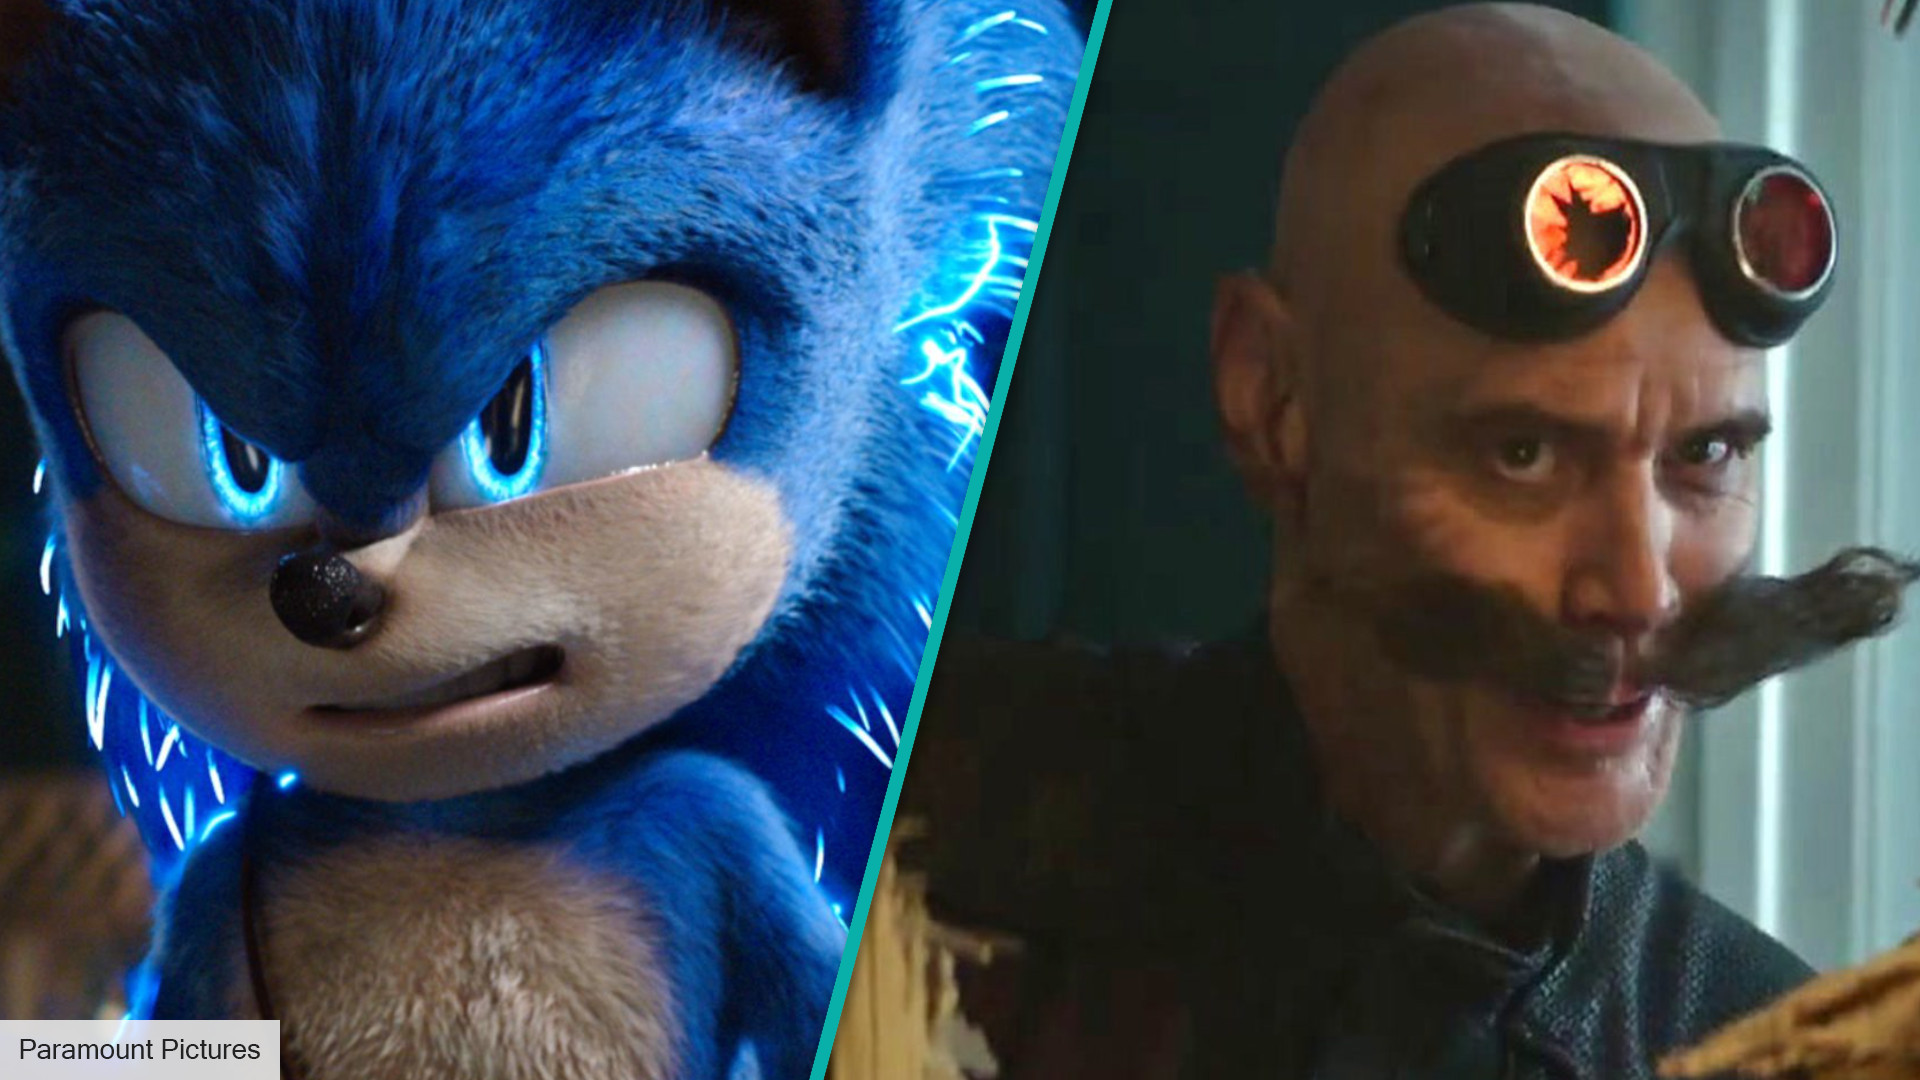 Sonic the Hedgehog 2 Post-Credits Scene Explained